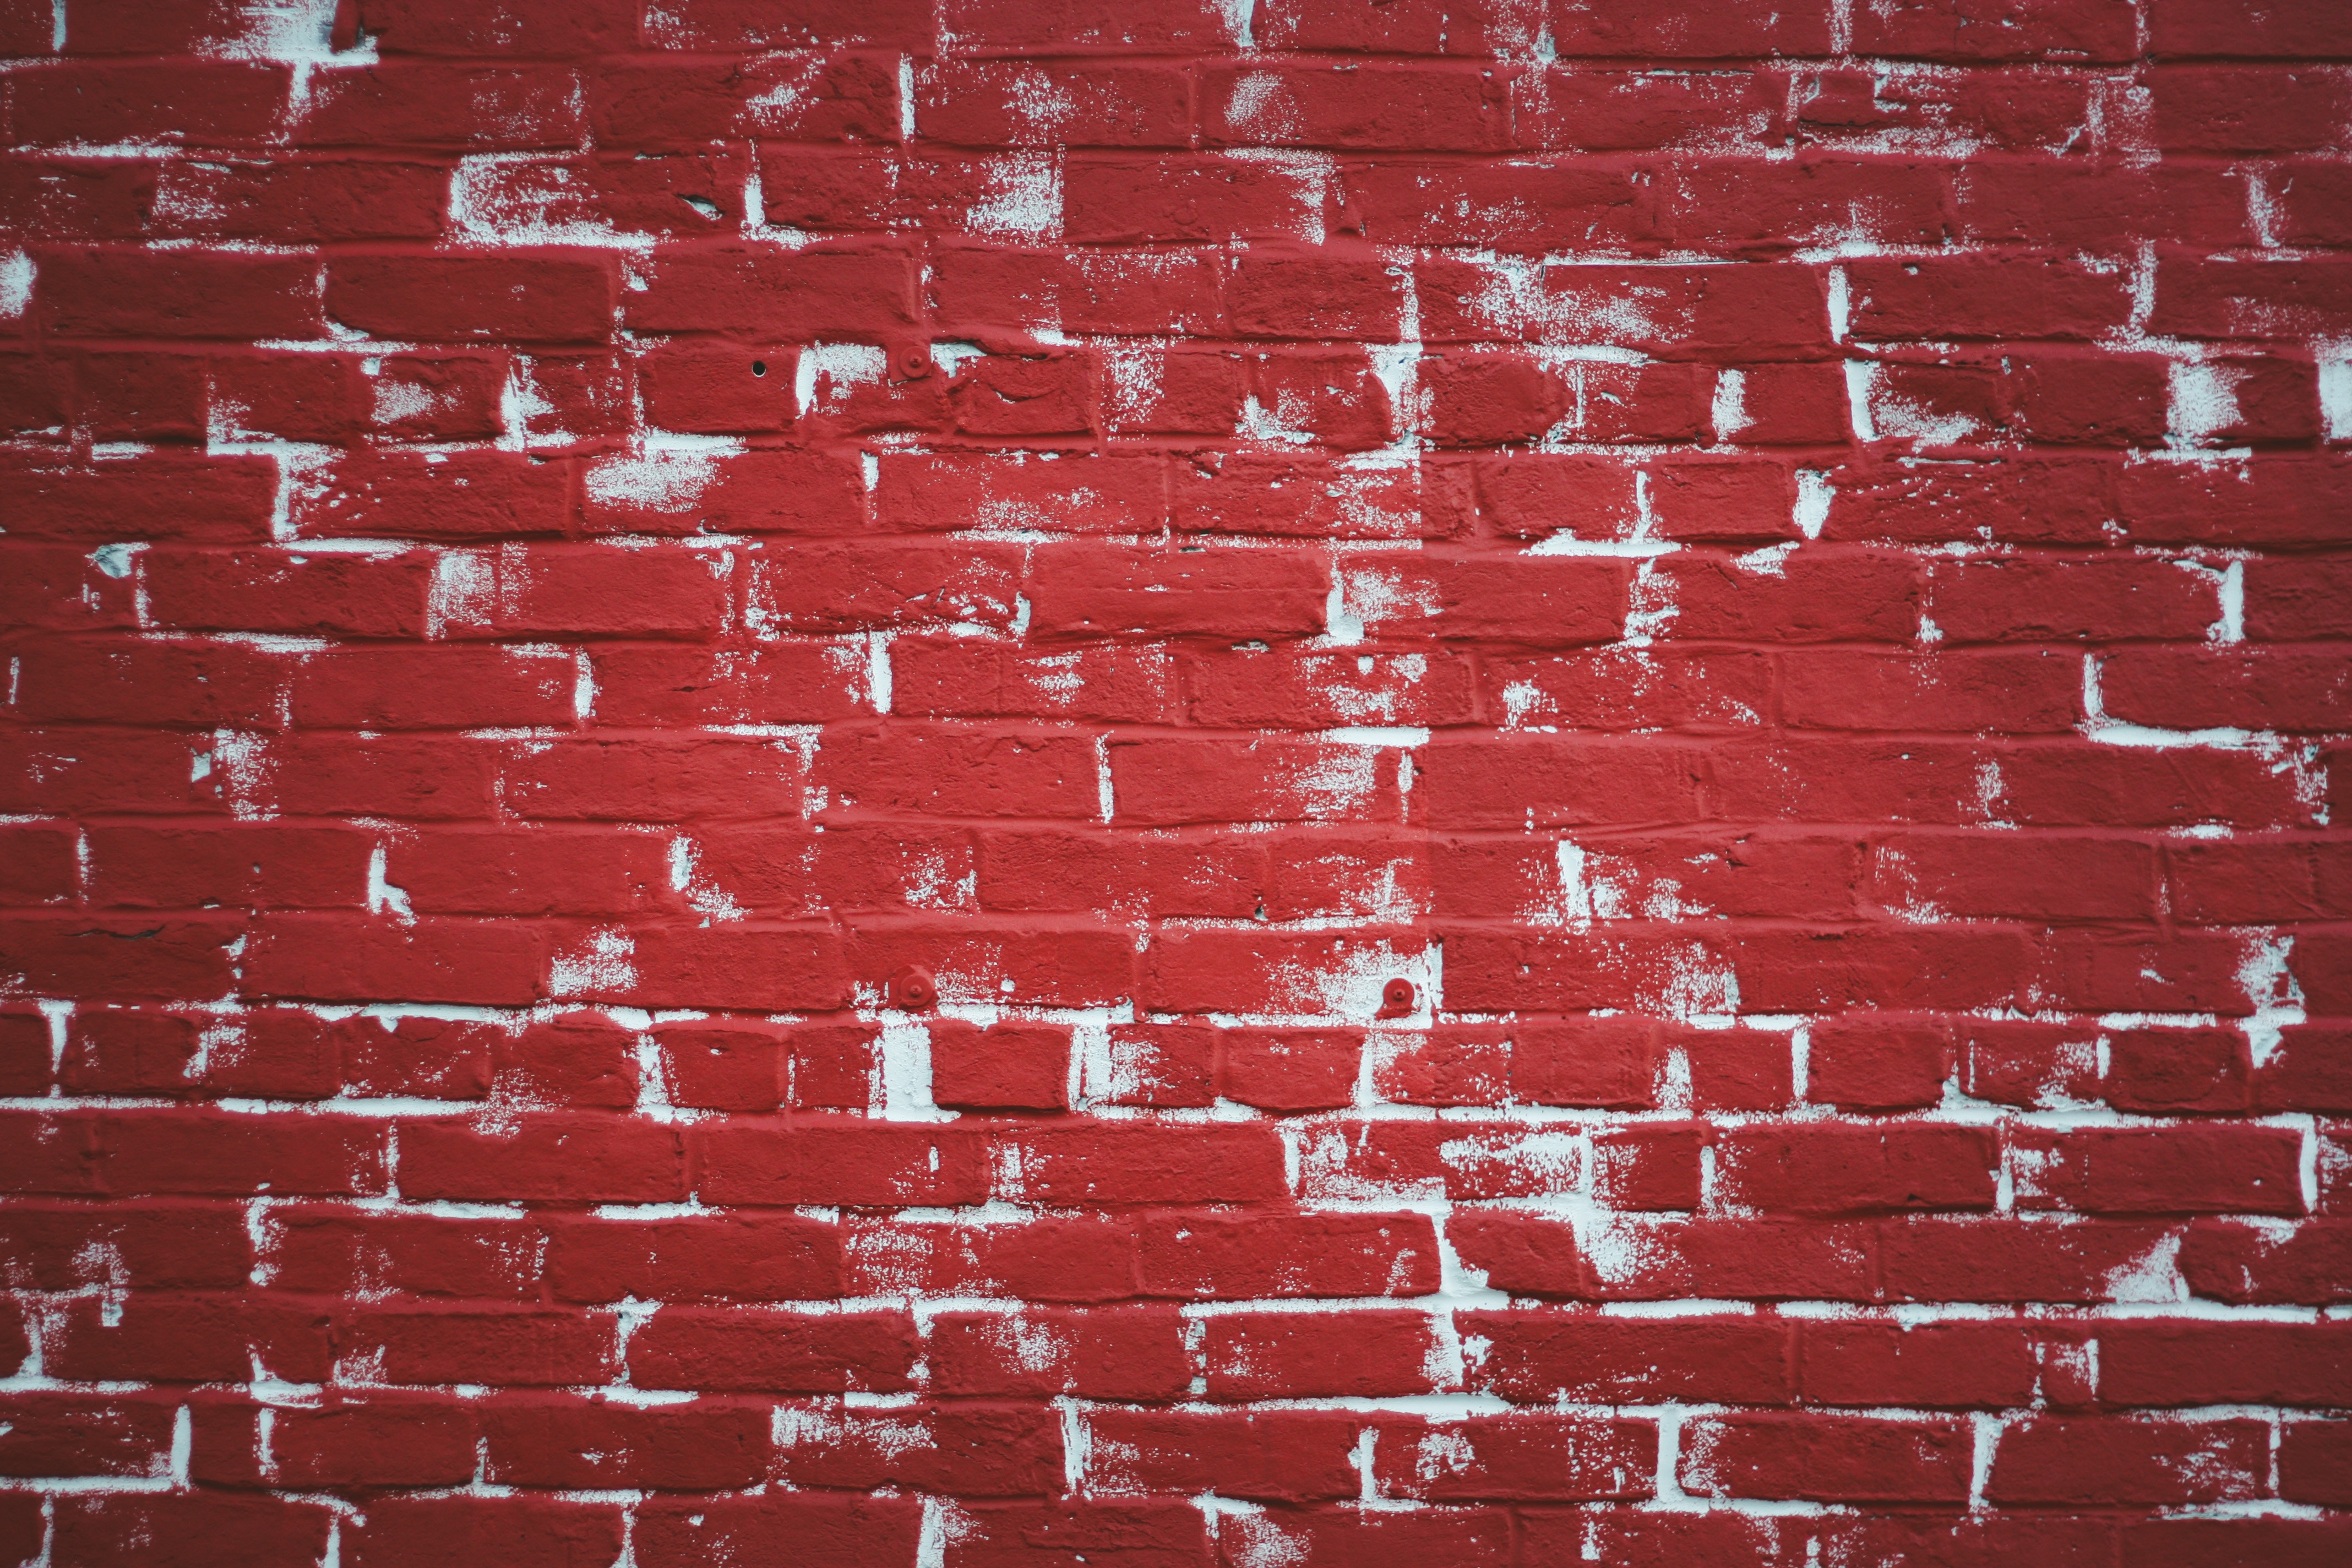 Красная кирпичная стена